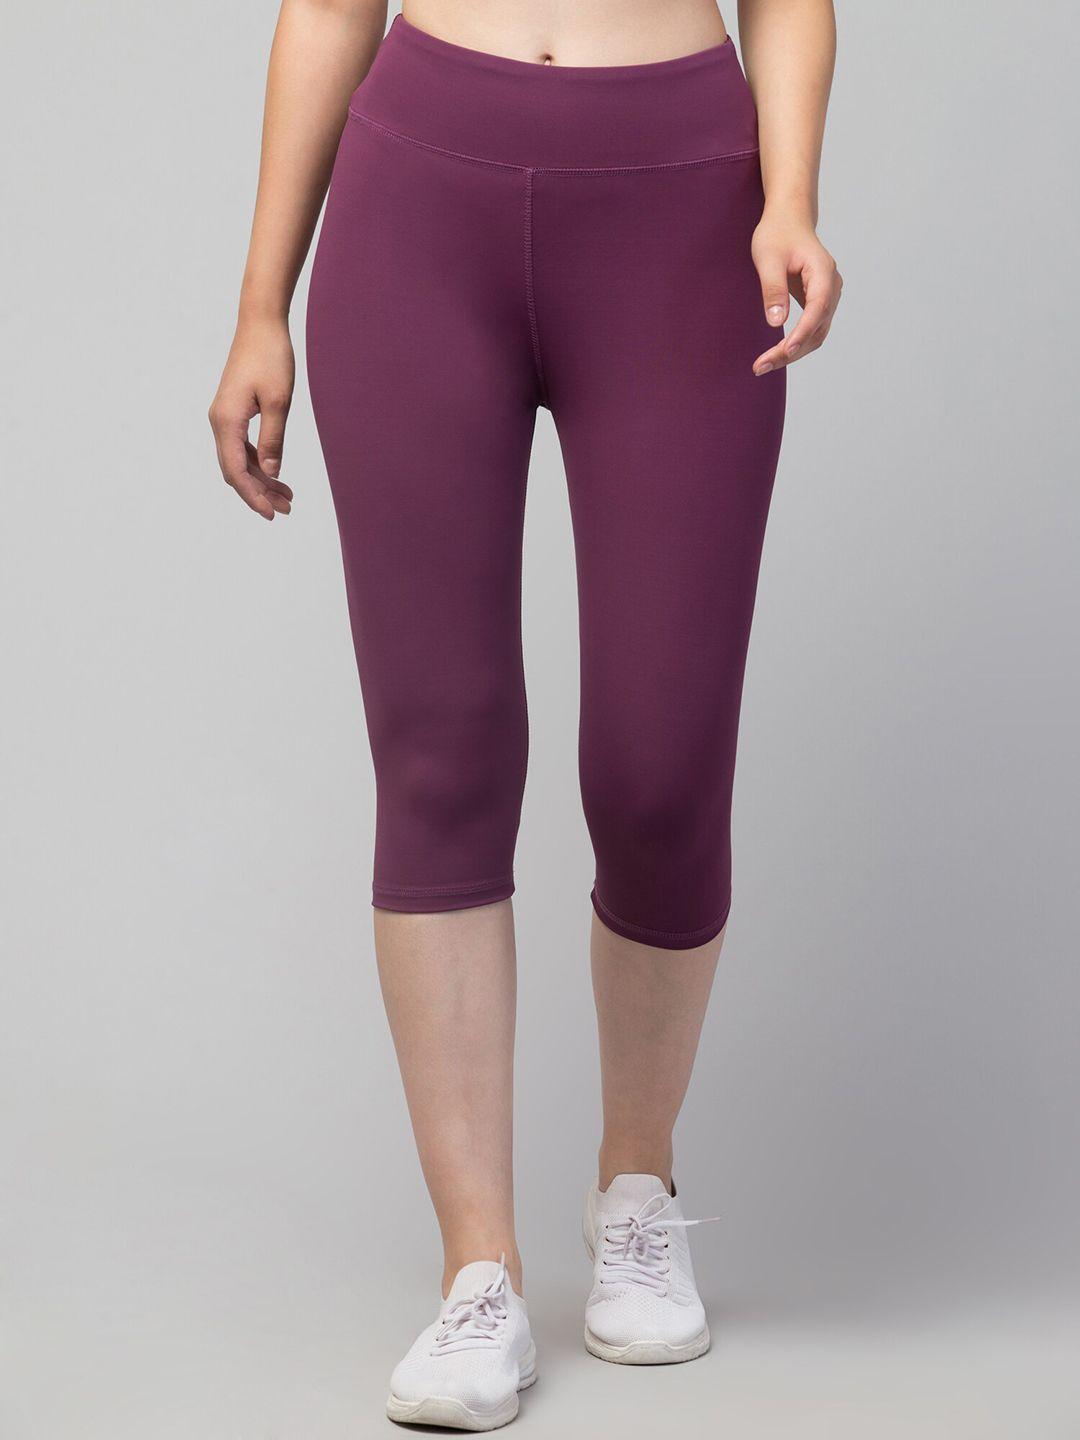 apraa & parma women purple solid dry fit yoga capri tights